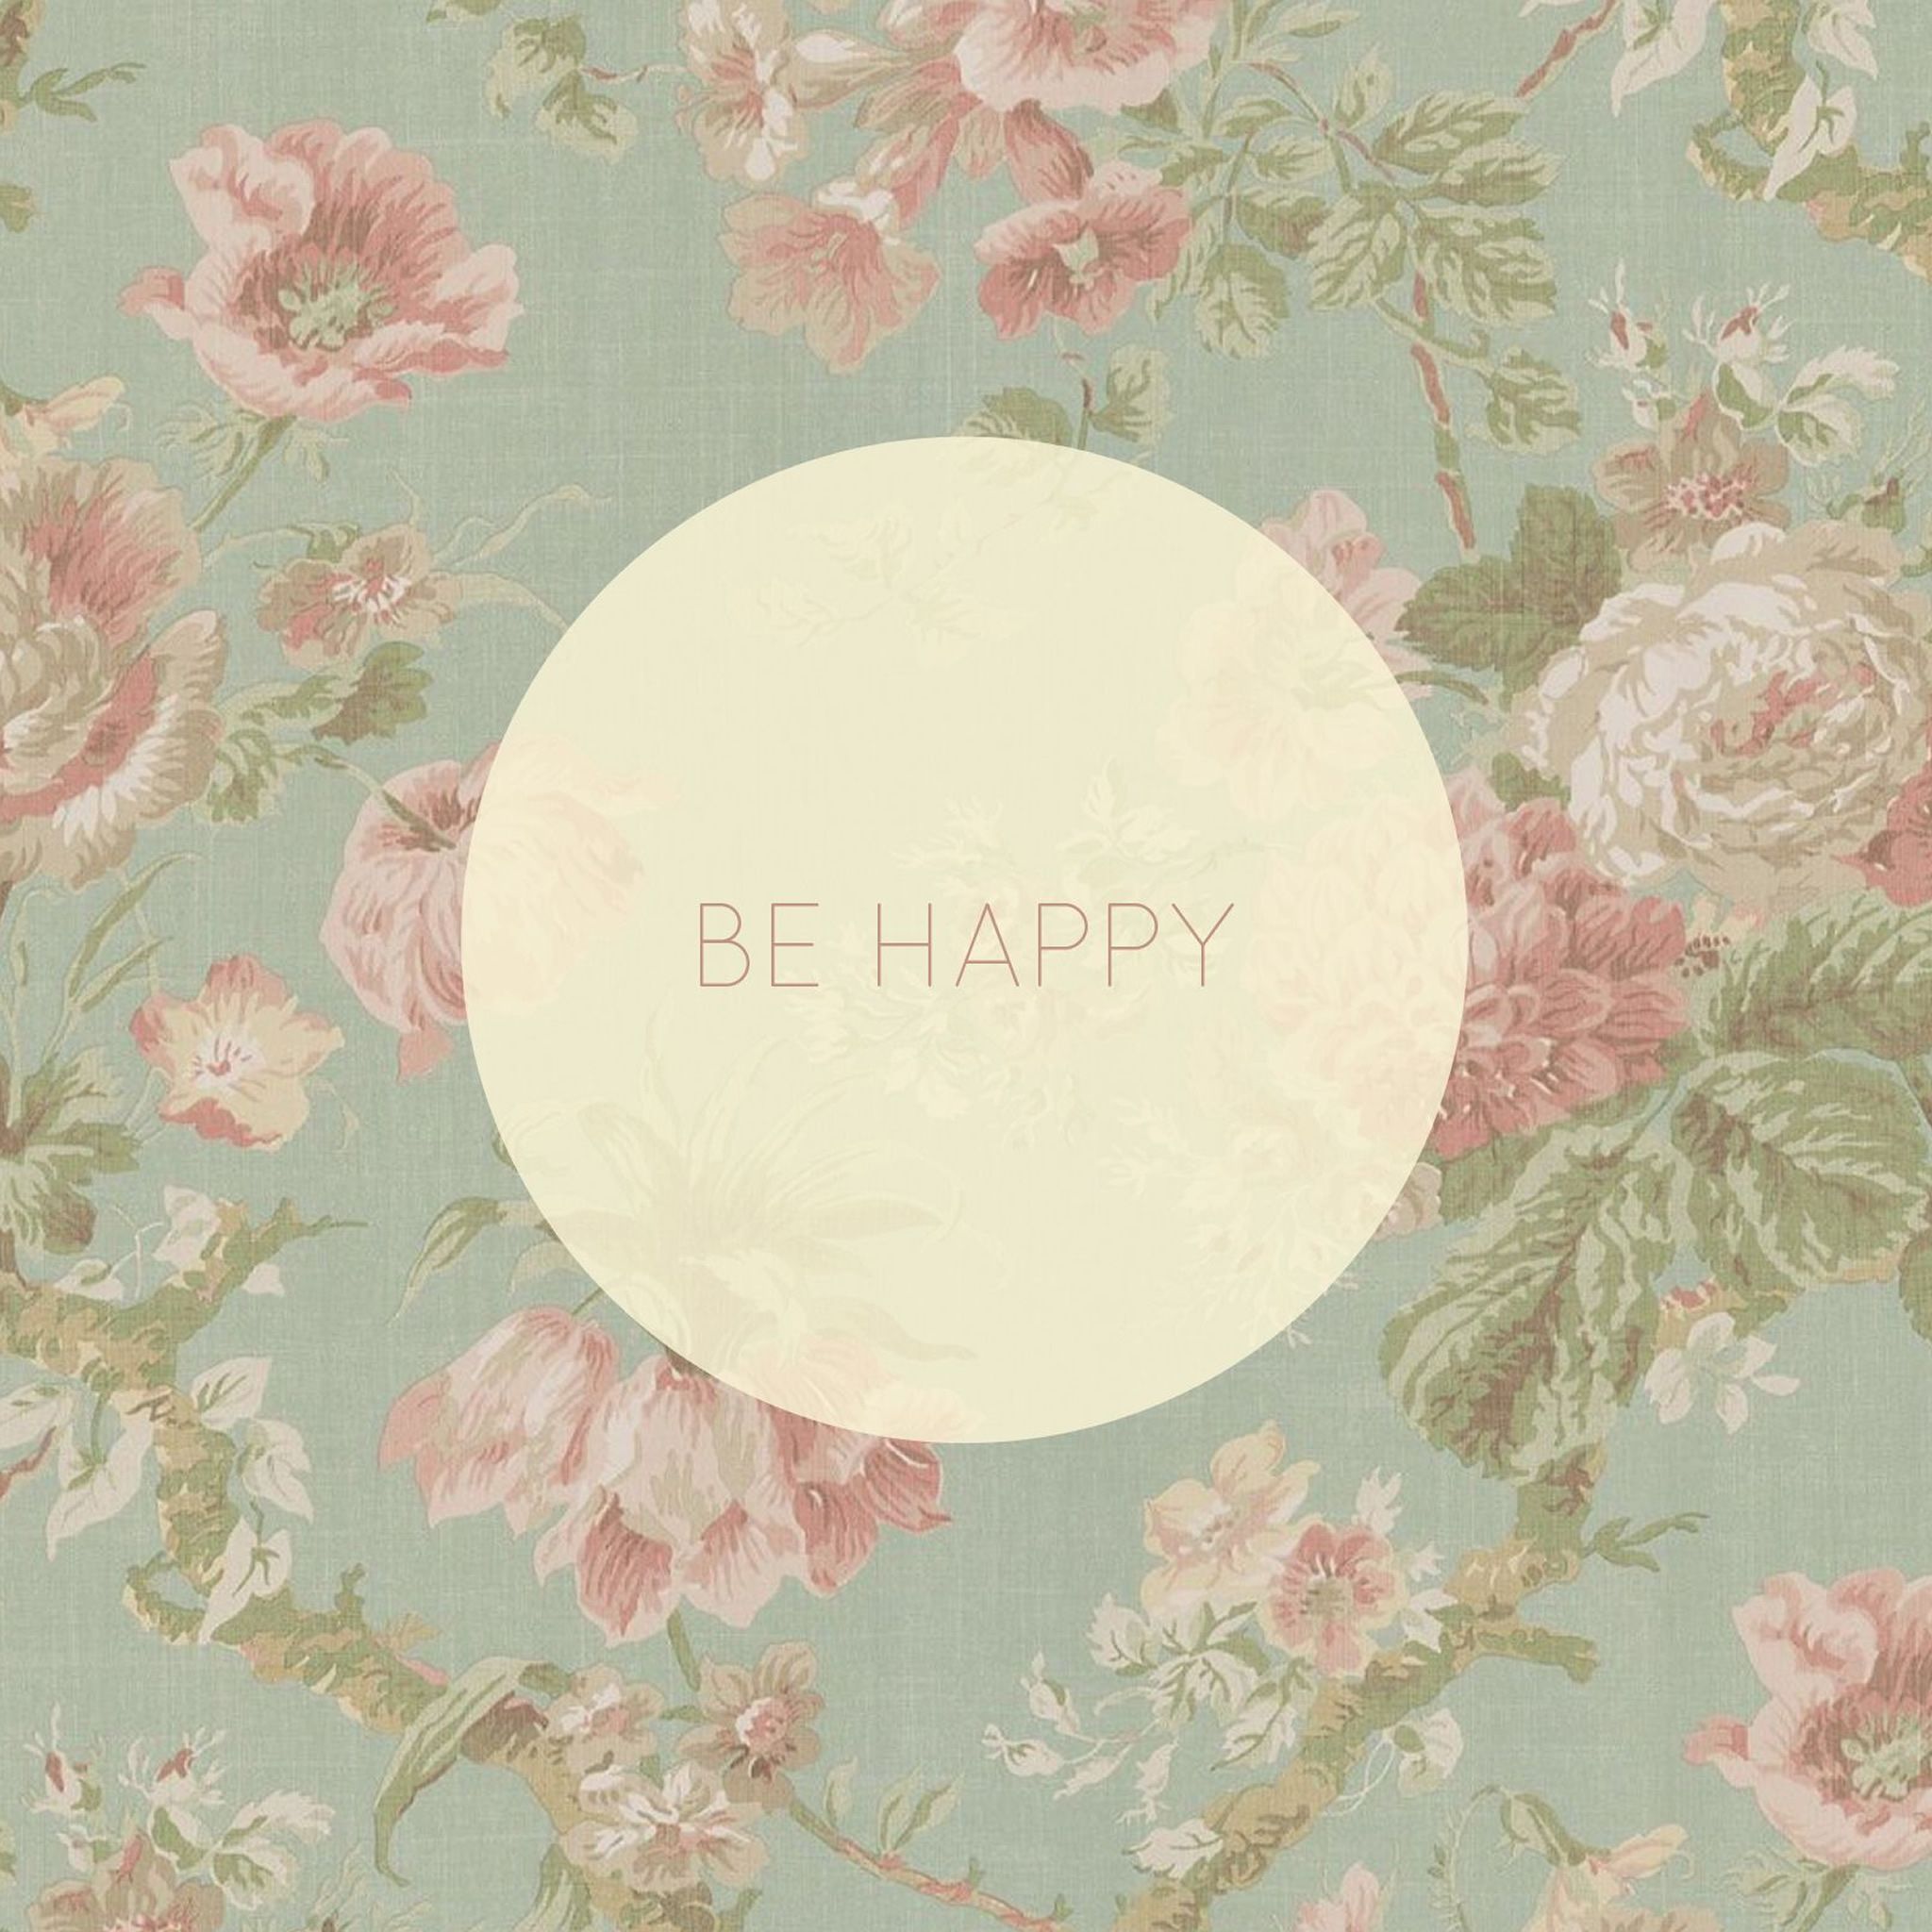 Be Happy Vintage Floral Pattern iPad Air Wallpaper Download ...